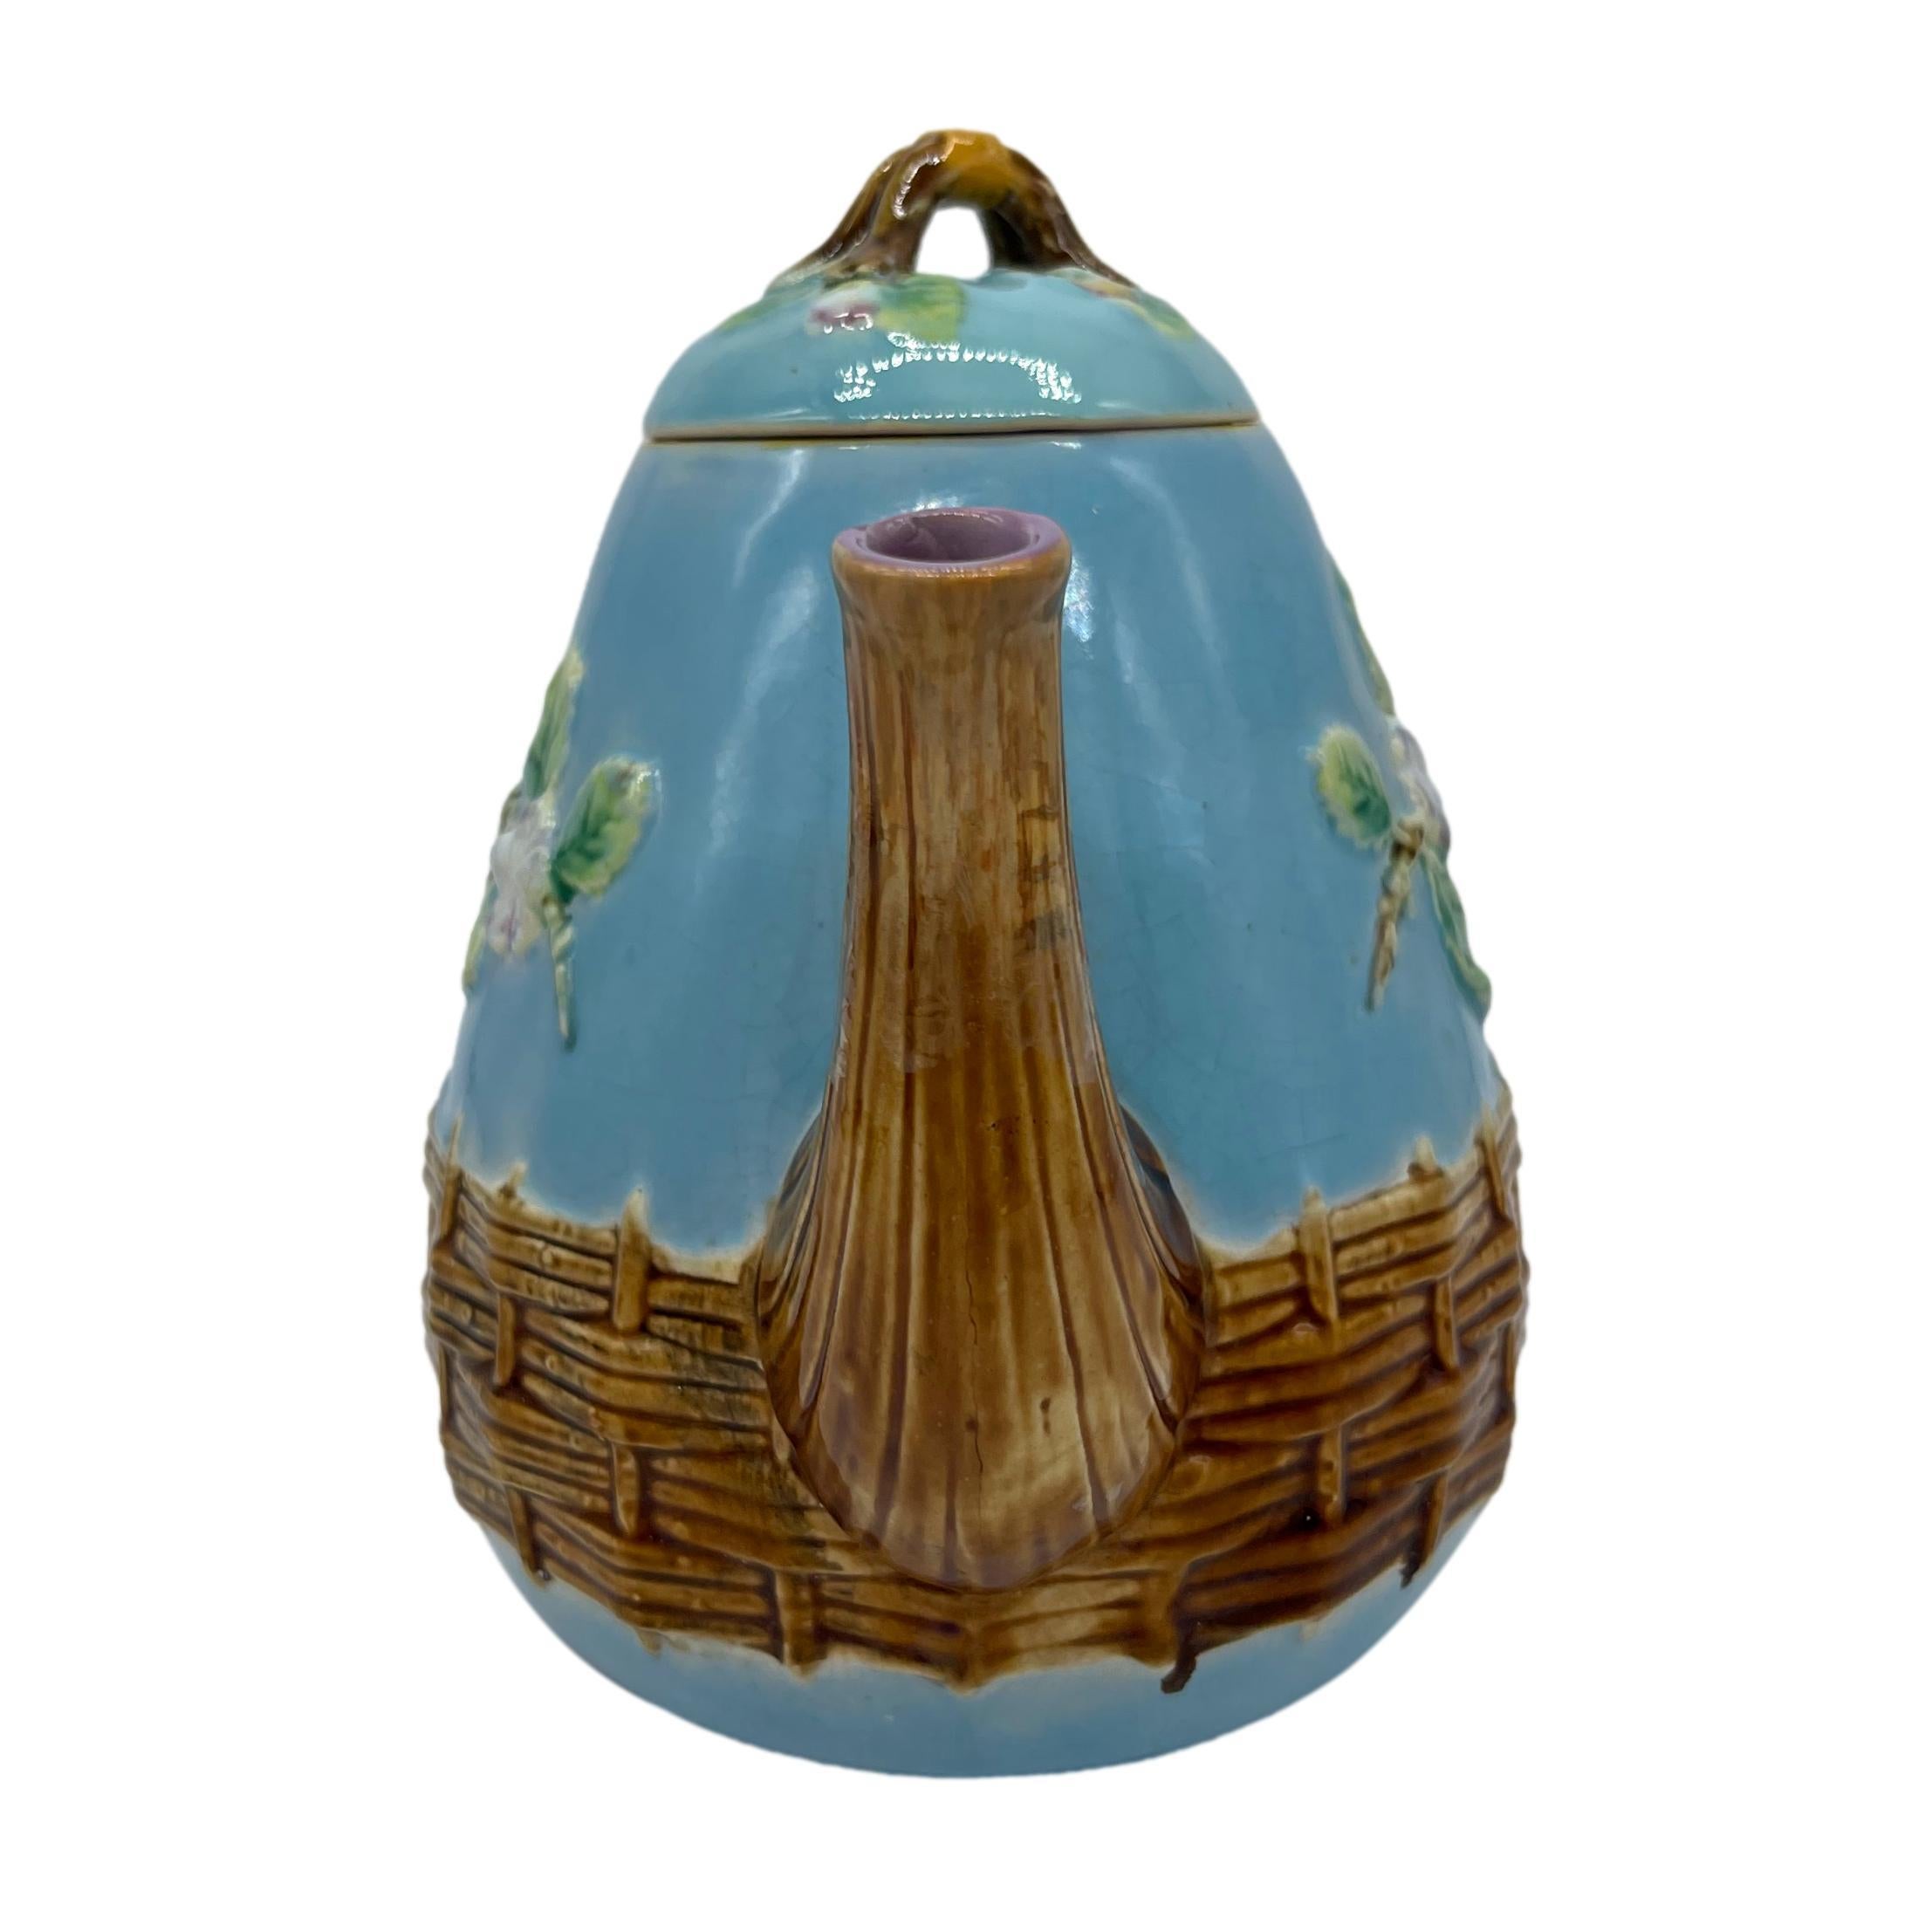 George Jones Majolica 'Apple Blossom' Teapot Basketweave on Turquoise, ca. 1873 For Sale 1